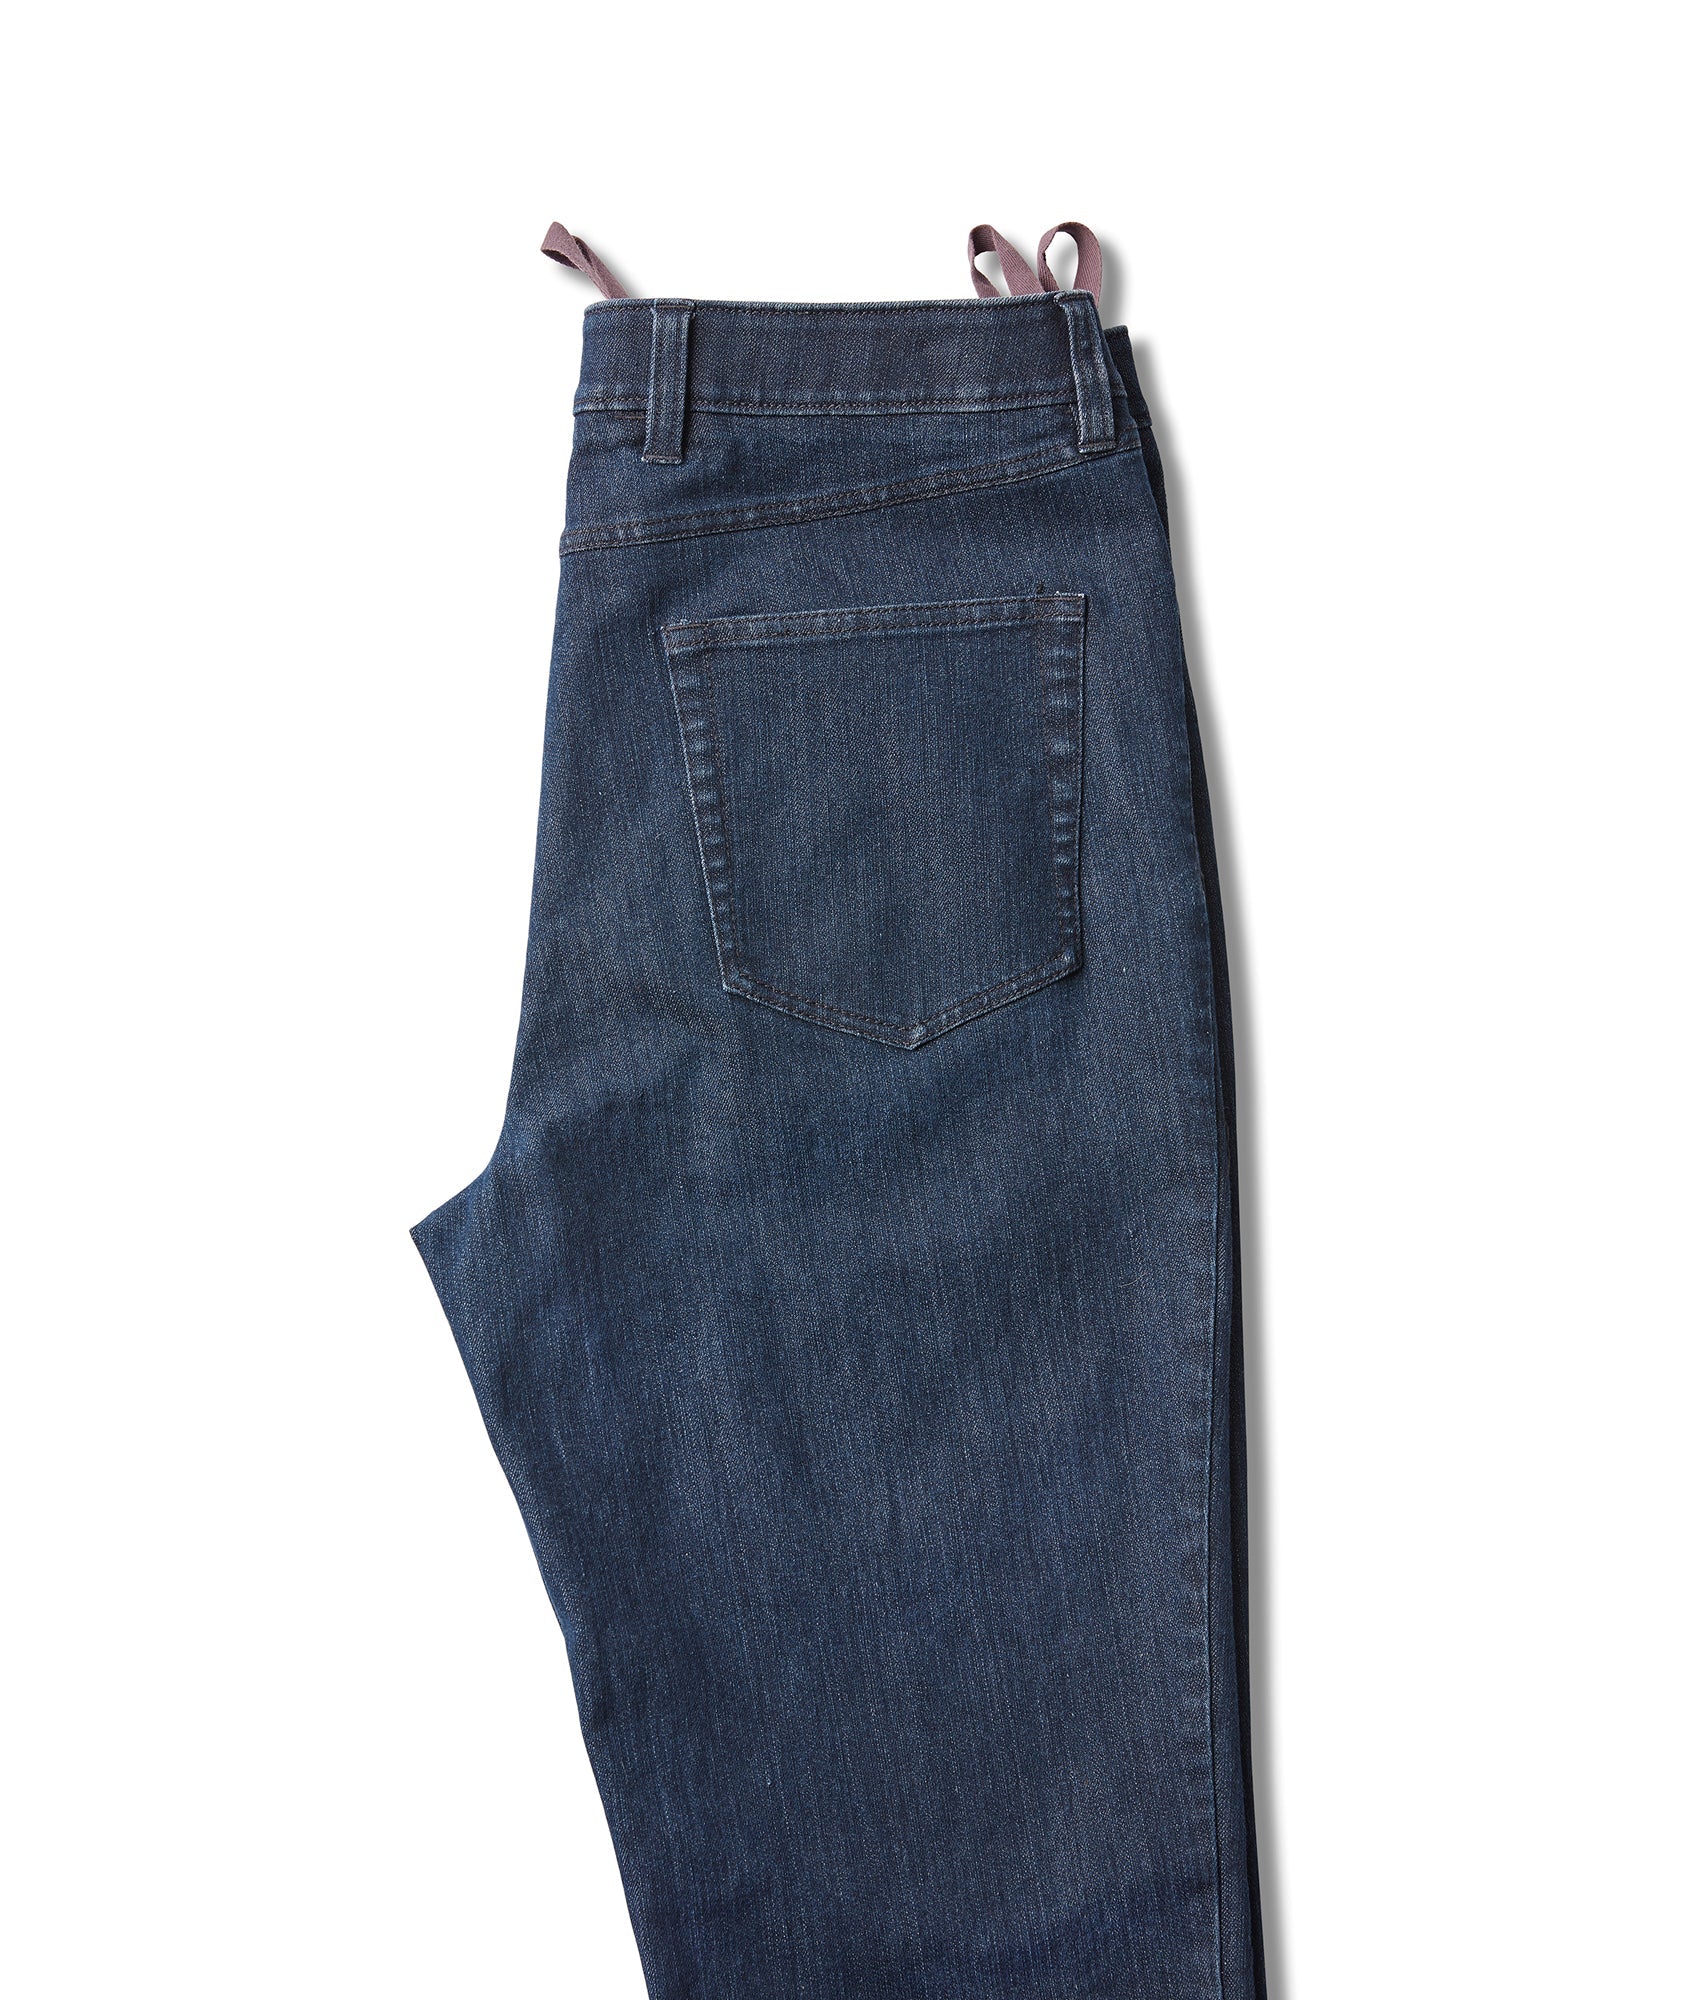 Denim ‘MVP’ Five Pocket Jean with Magnetic Closures - Indigo